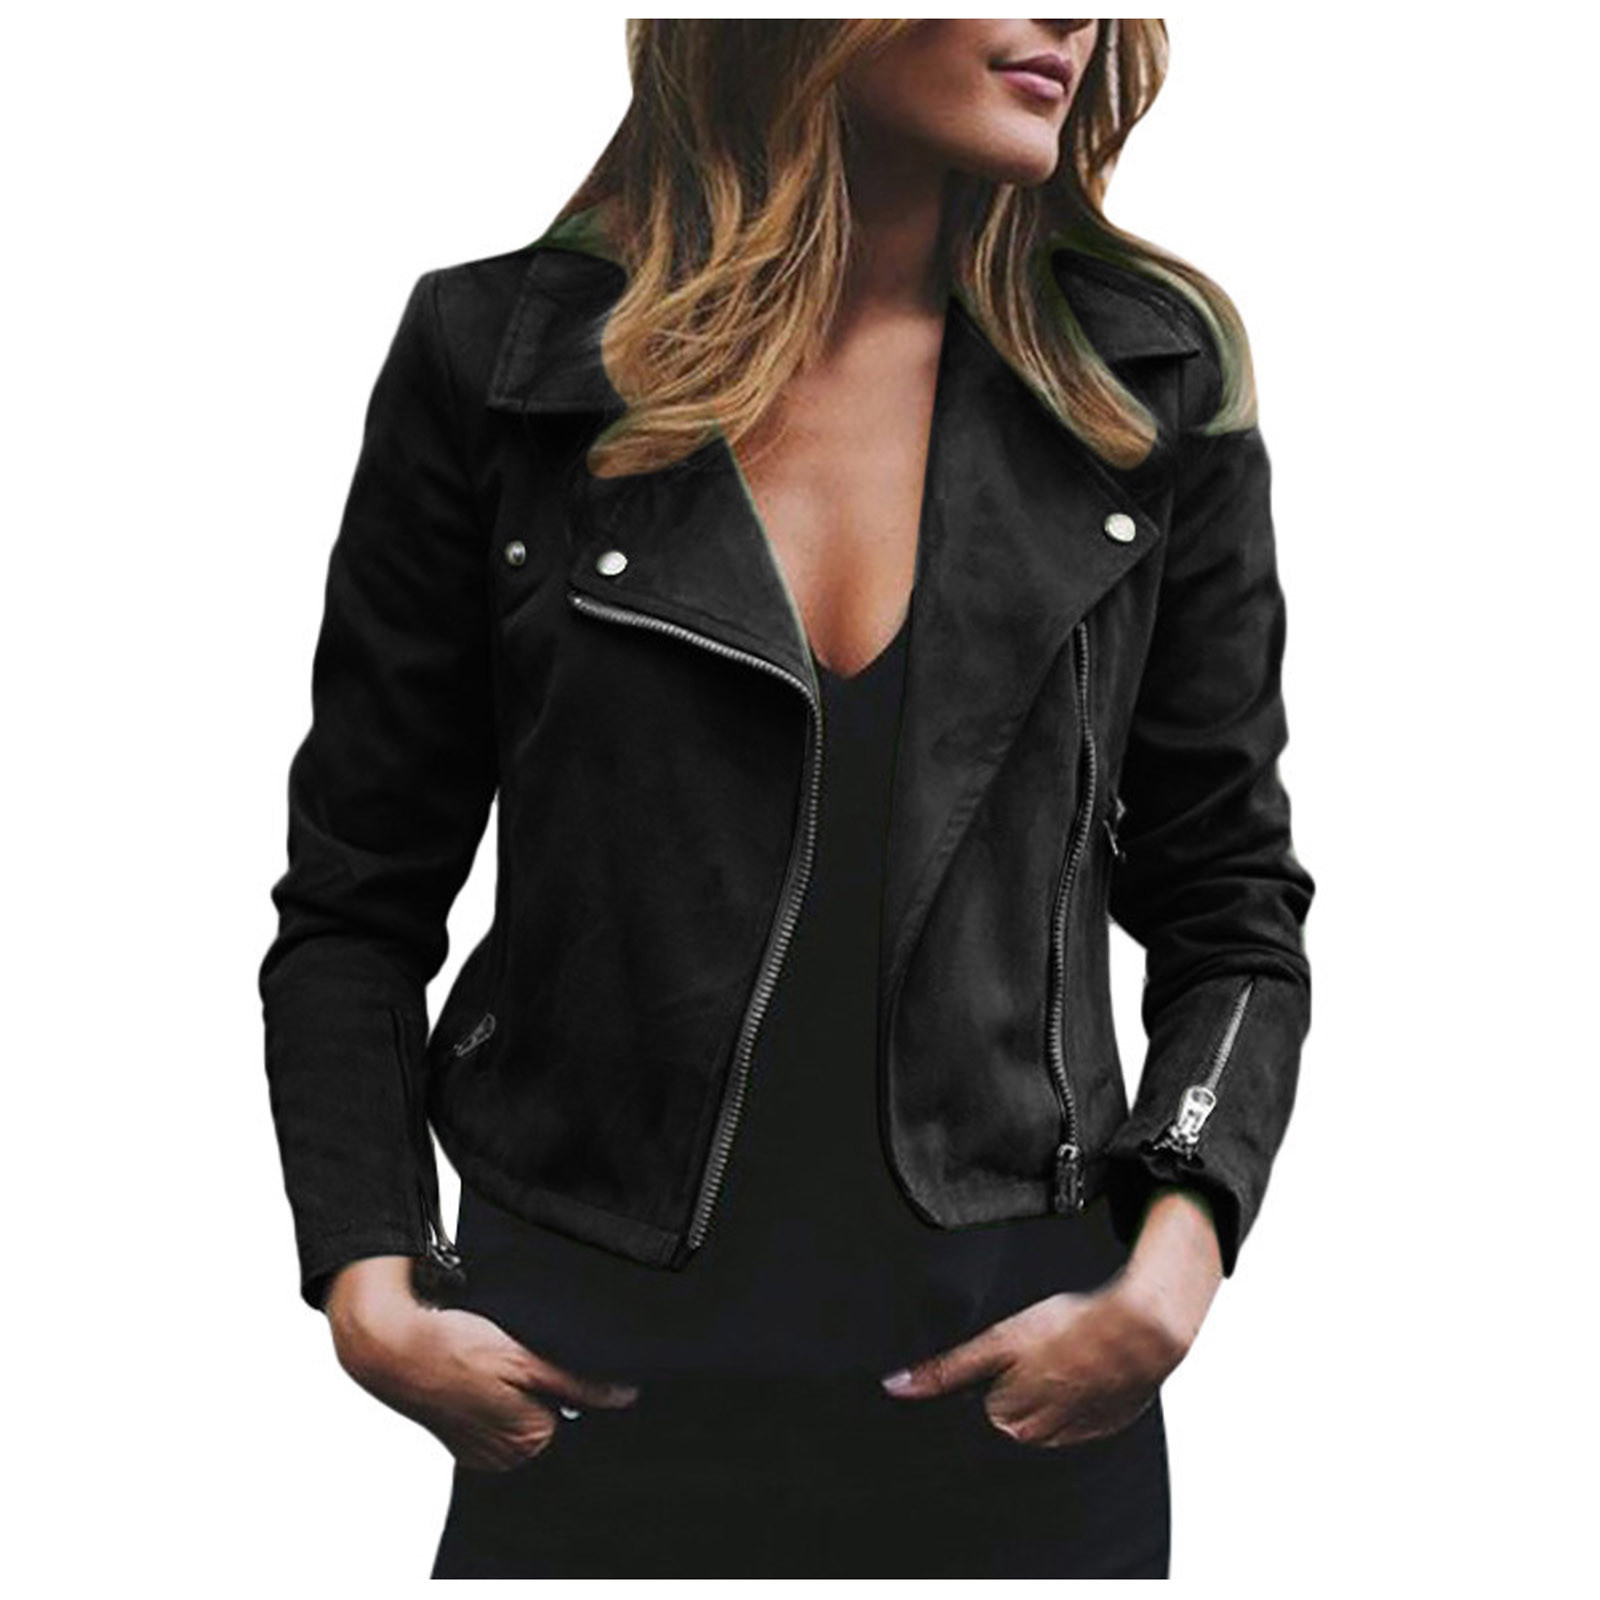 Leather Jacket for Women Fashion Leather Motorcycle Jacket Plus Size Faux Leather Tops Lightweight Short Jacket Coat - image 1 of 8